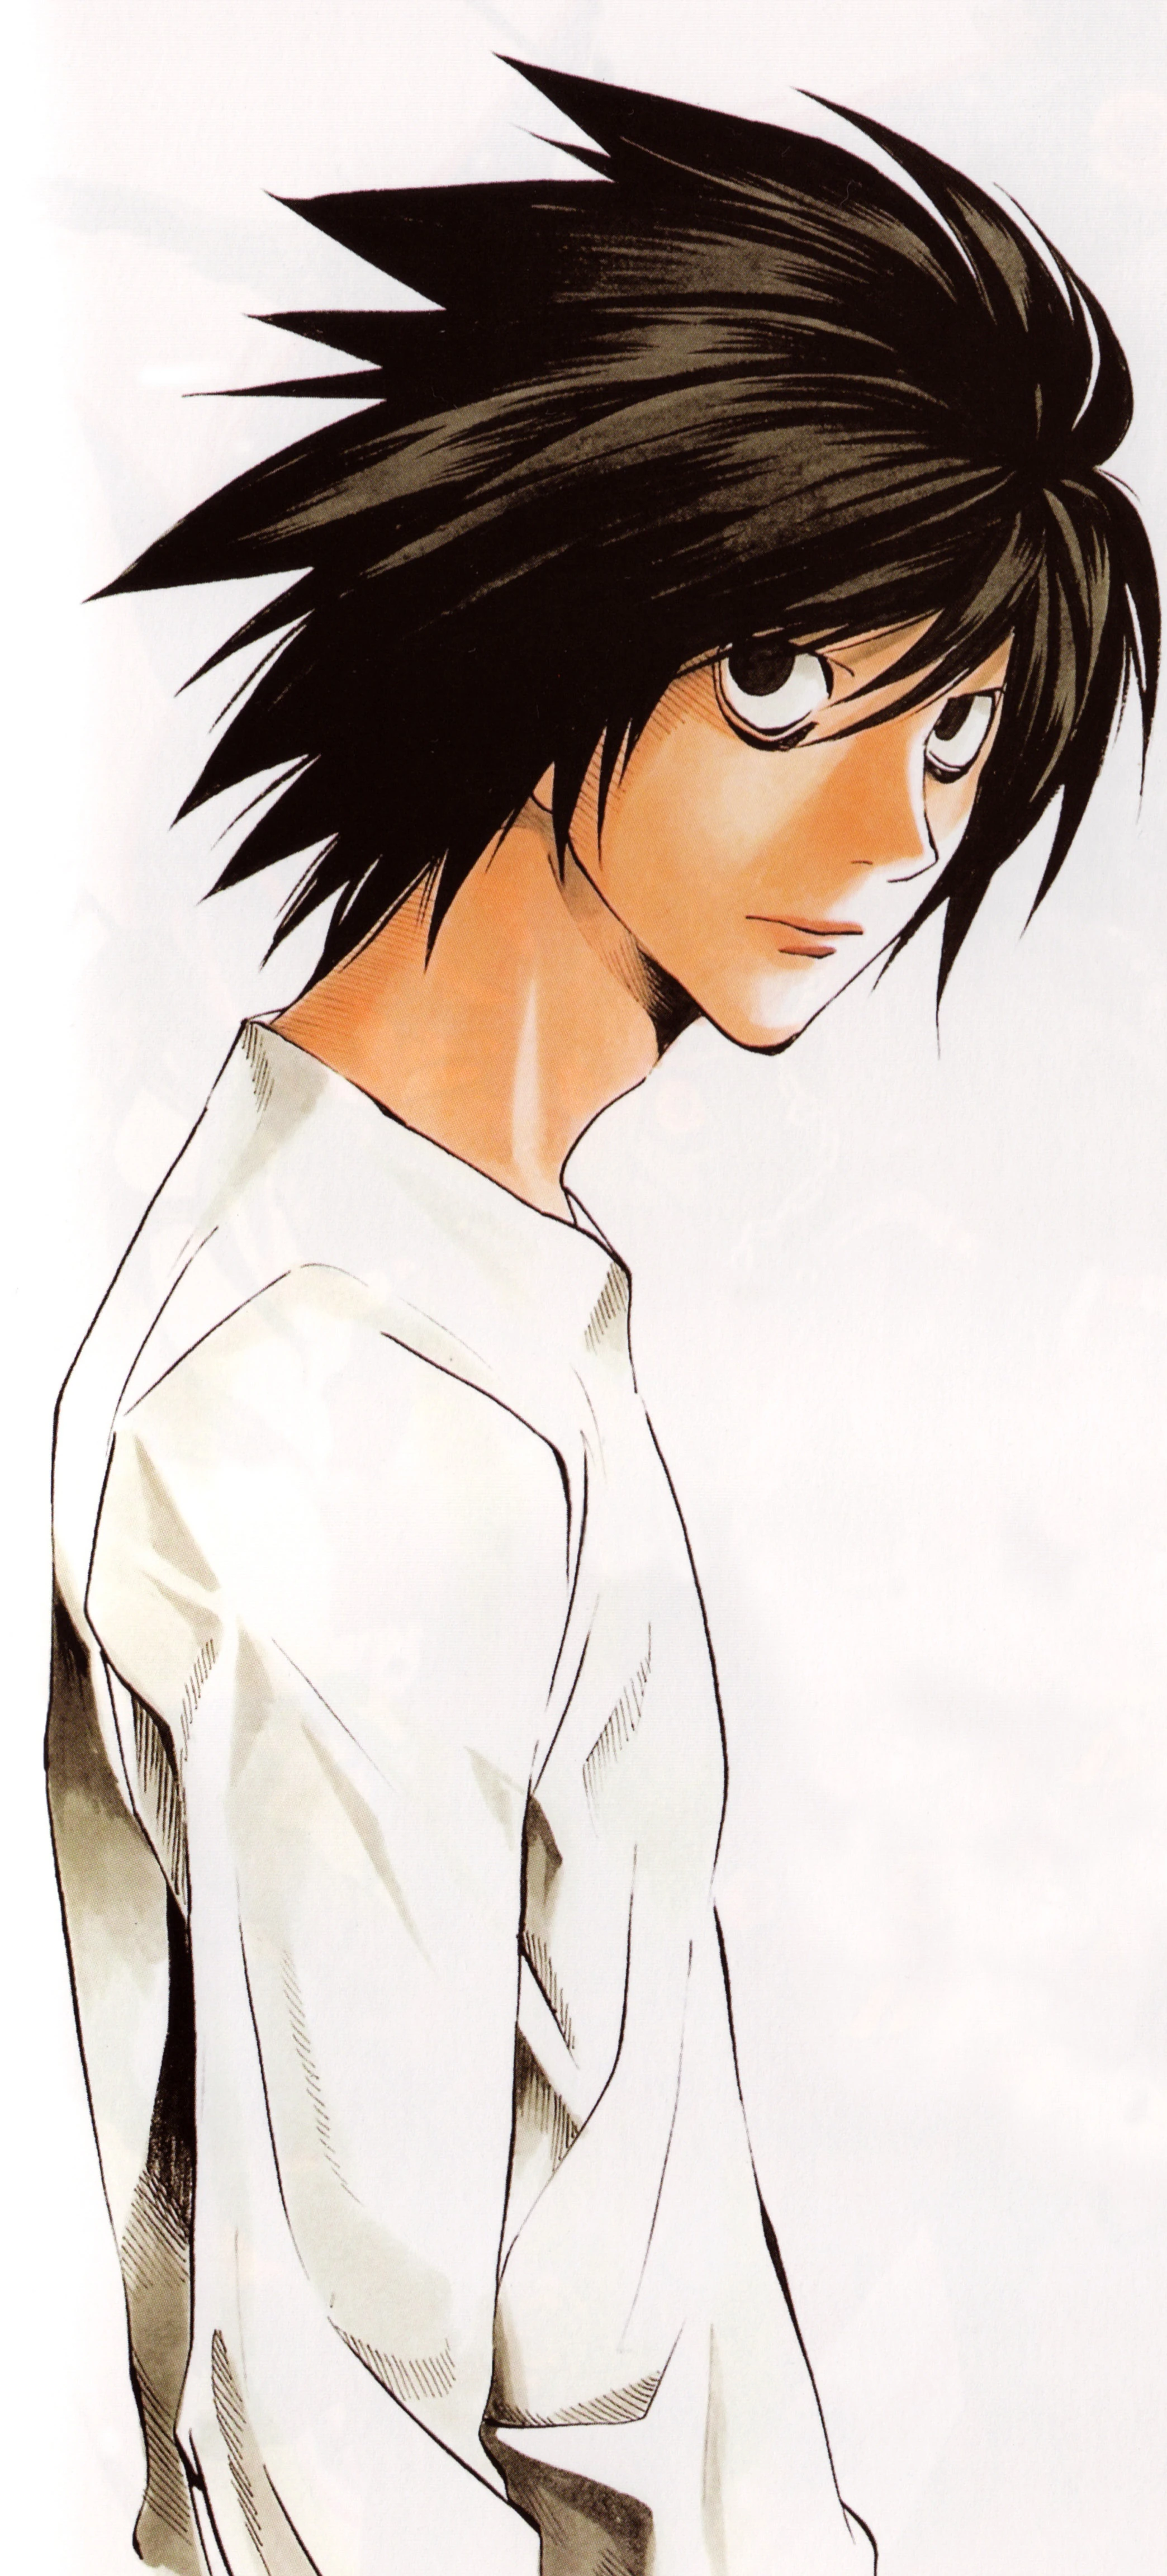 L (character) | Death Note Wiki | Fandom